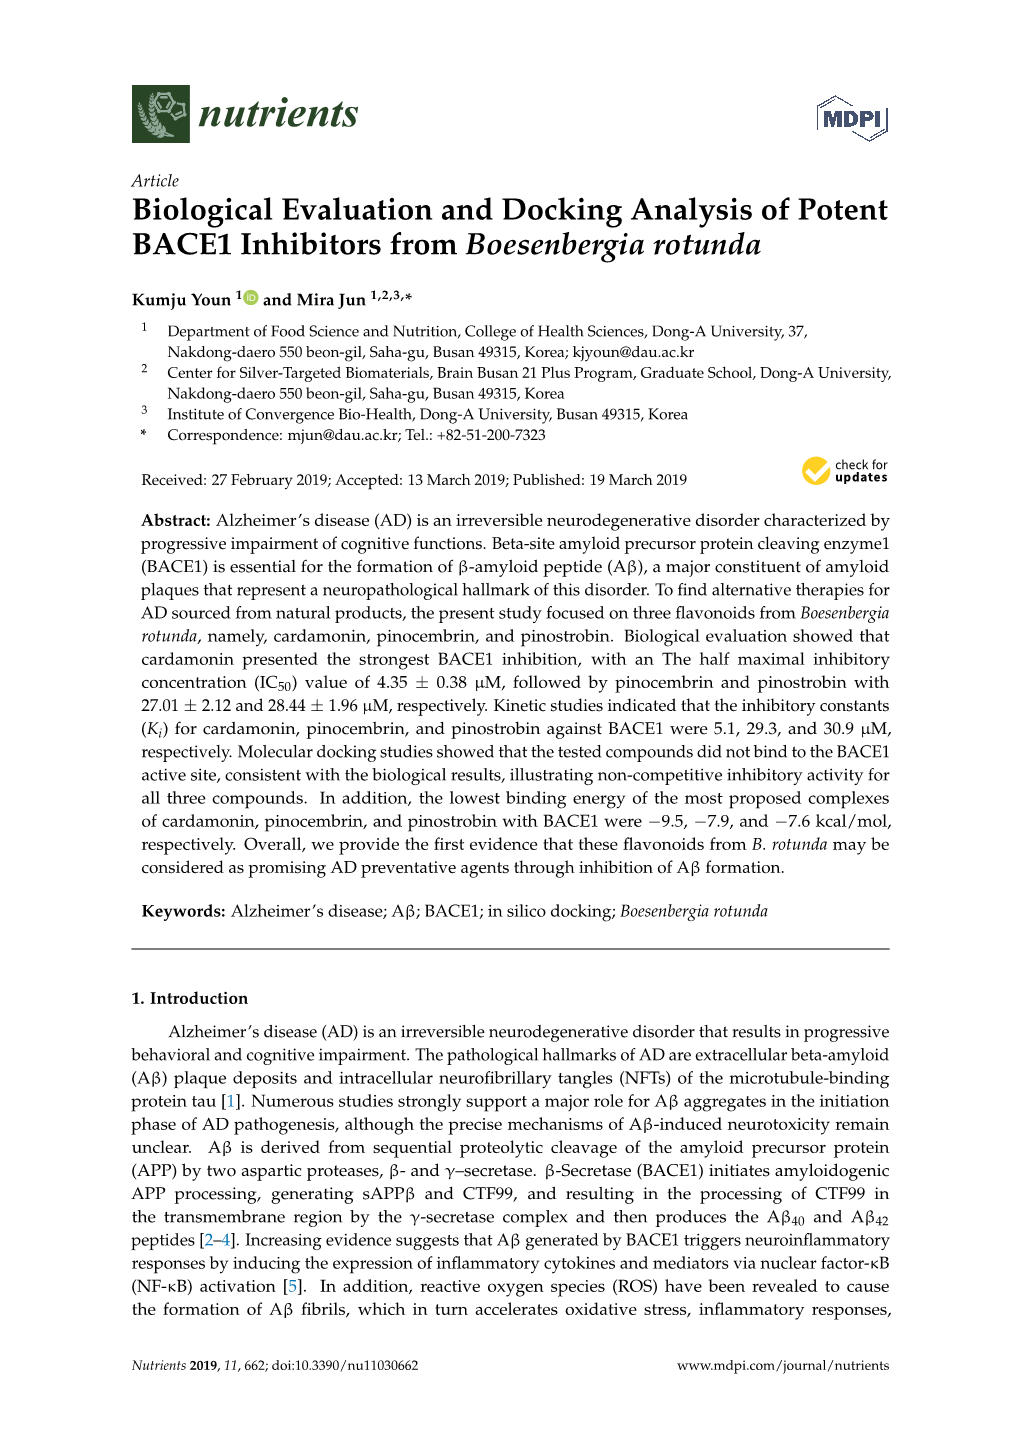 Biological Evaluation and Docking Analysis of Potent BACE1 Inhibitors from Boesenbergia Rotunda